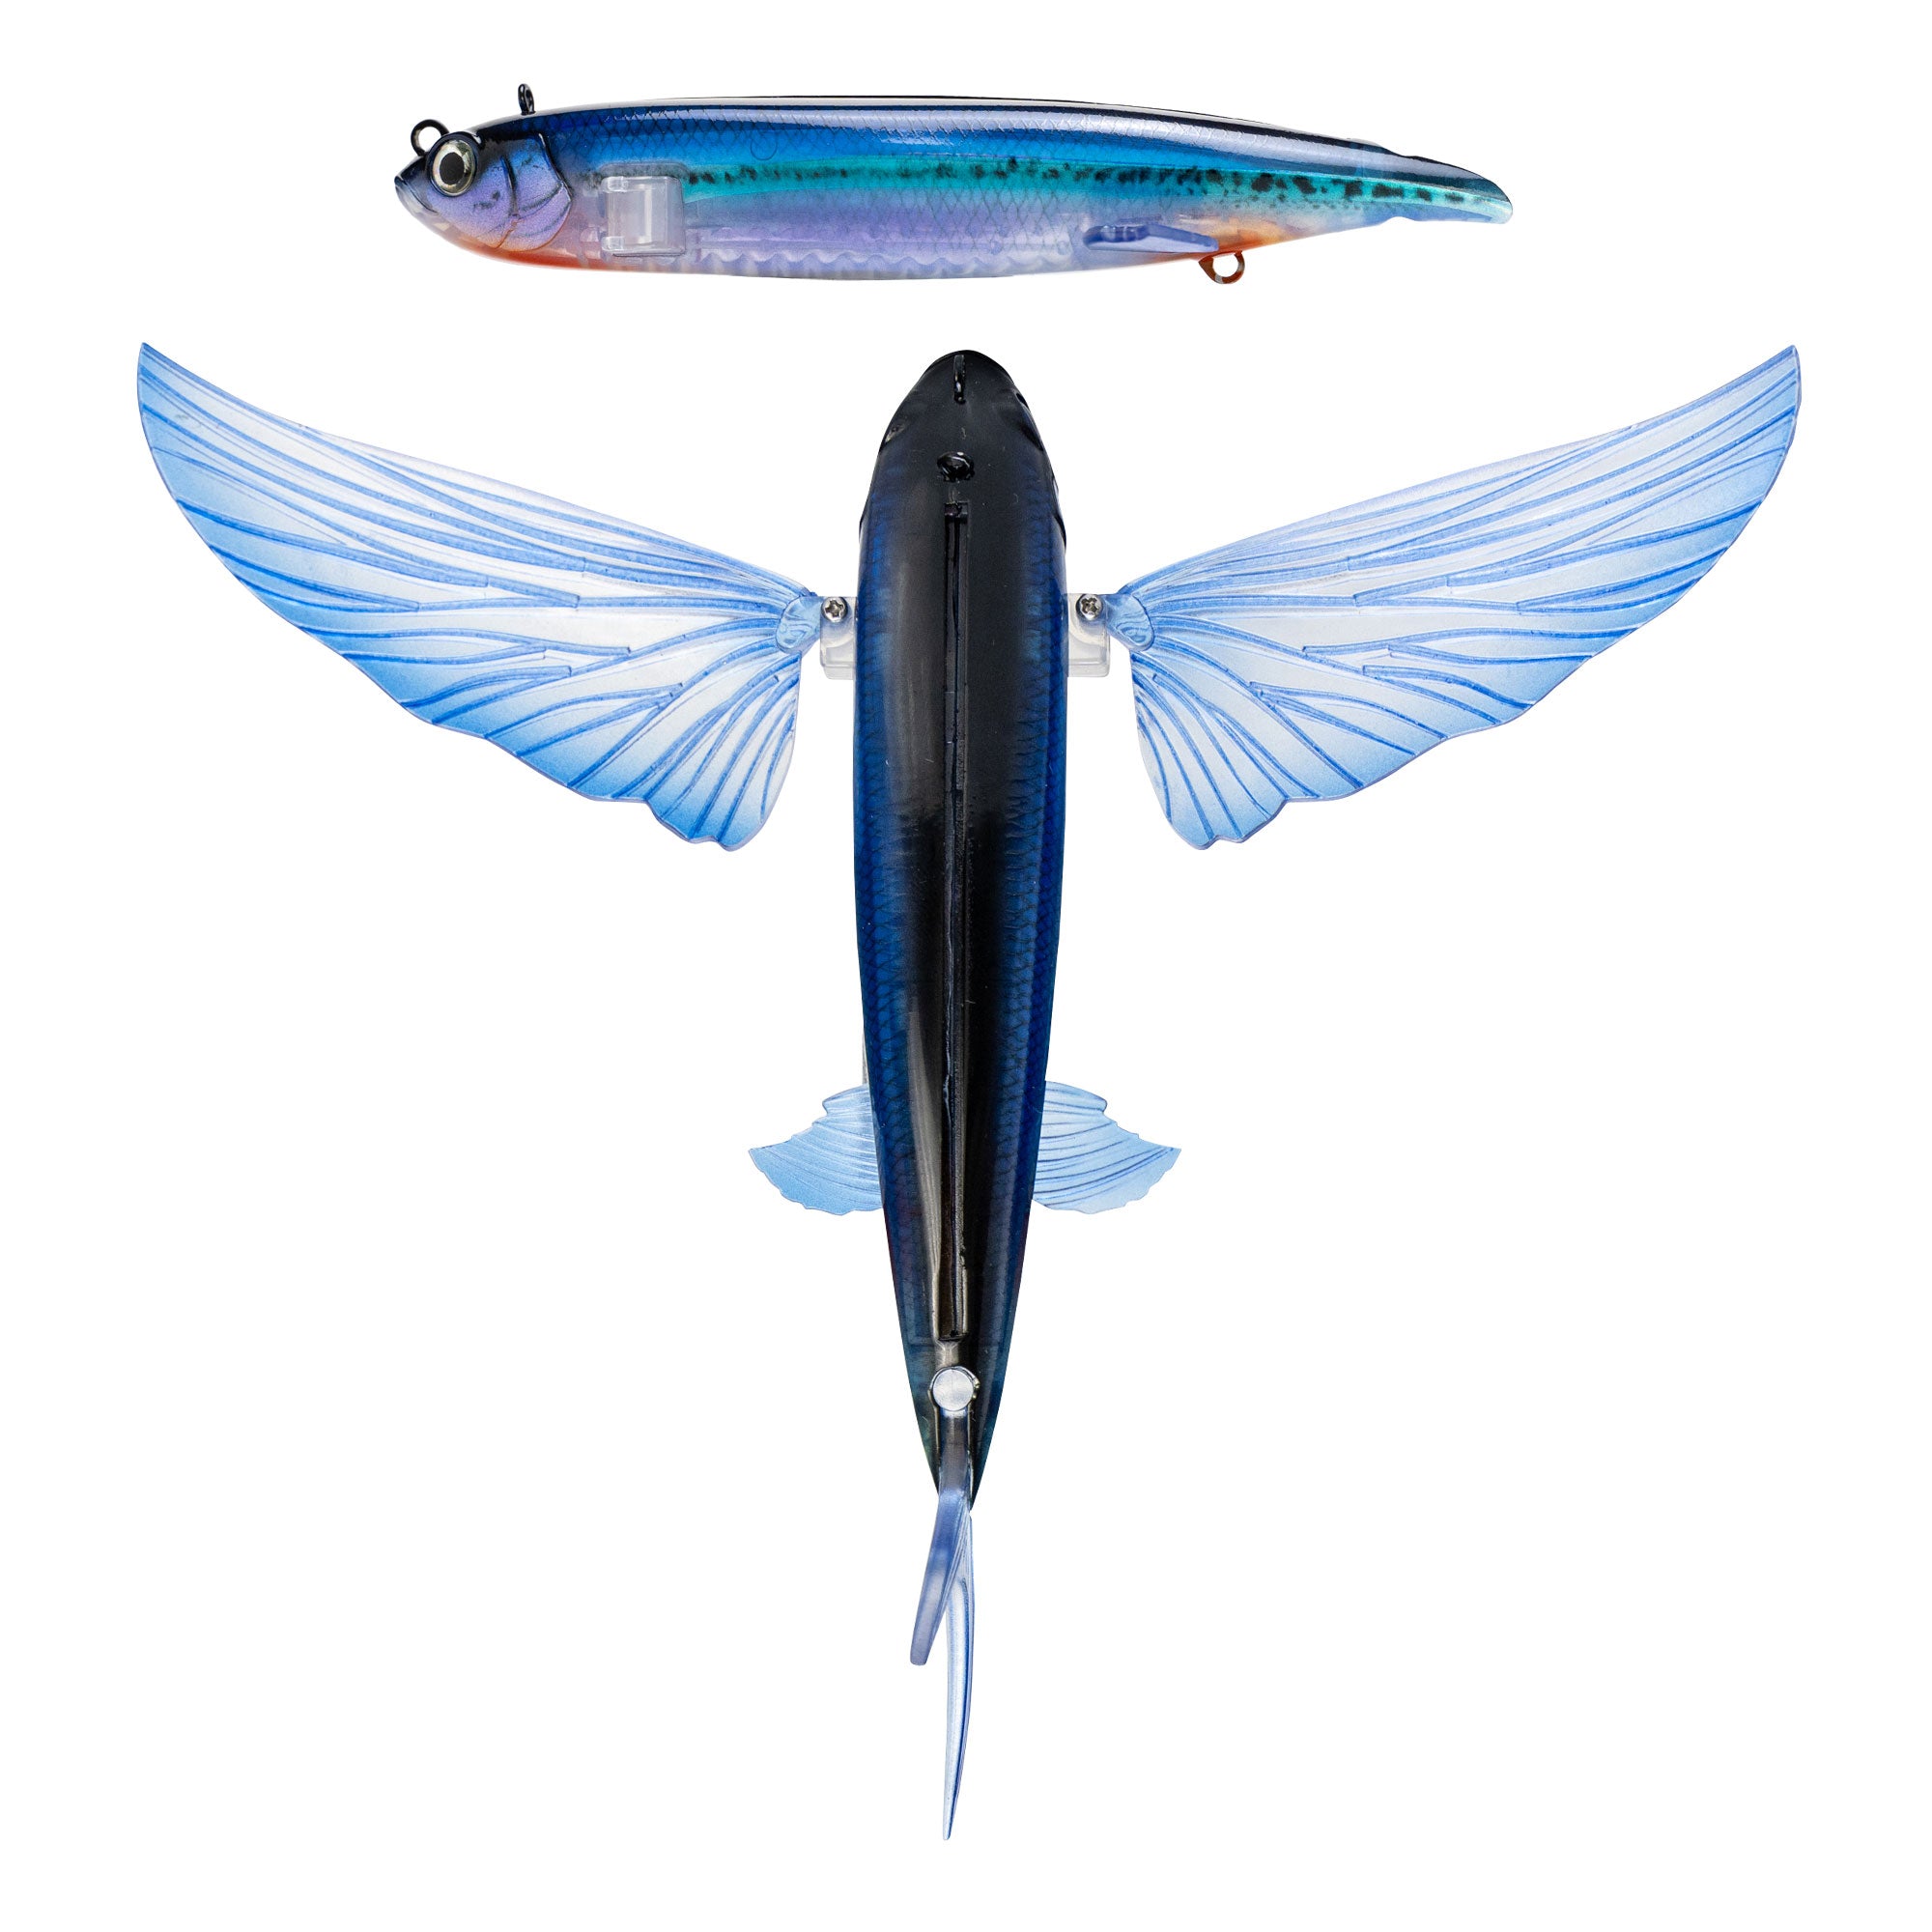 Nomad Design - Slipstream Flying Fish